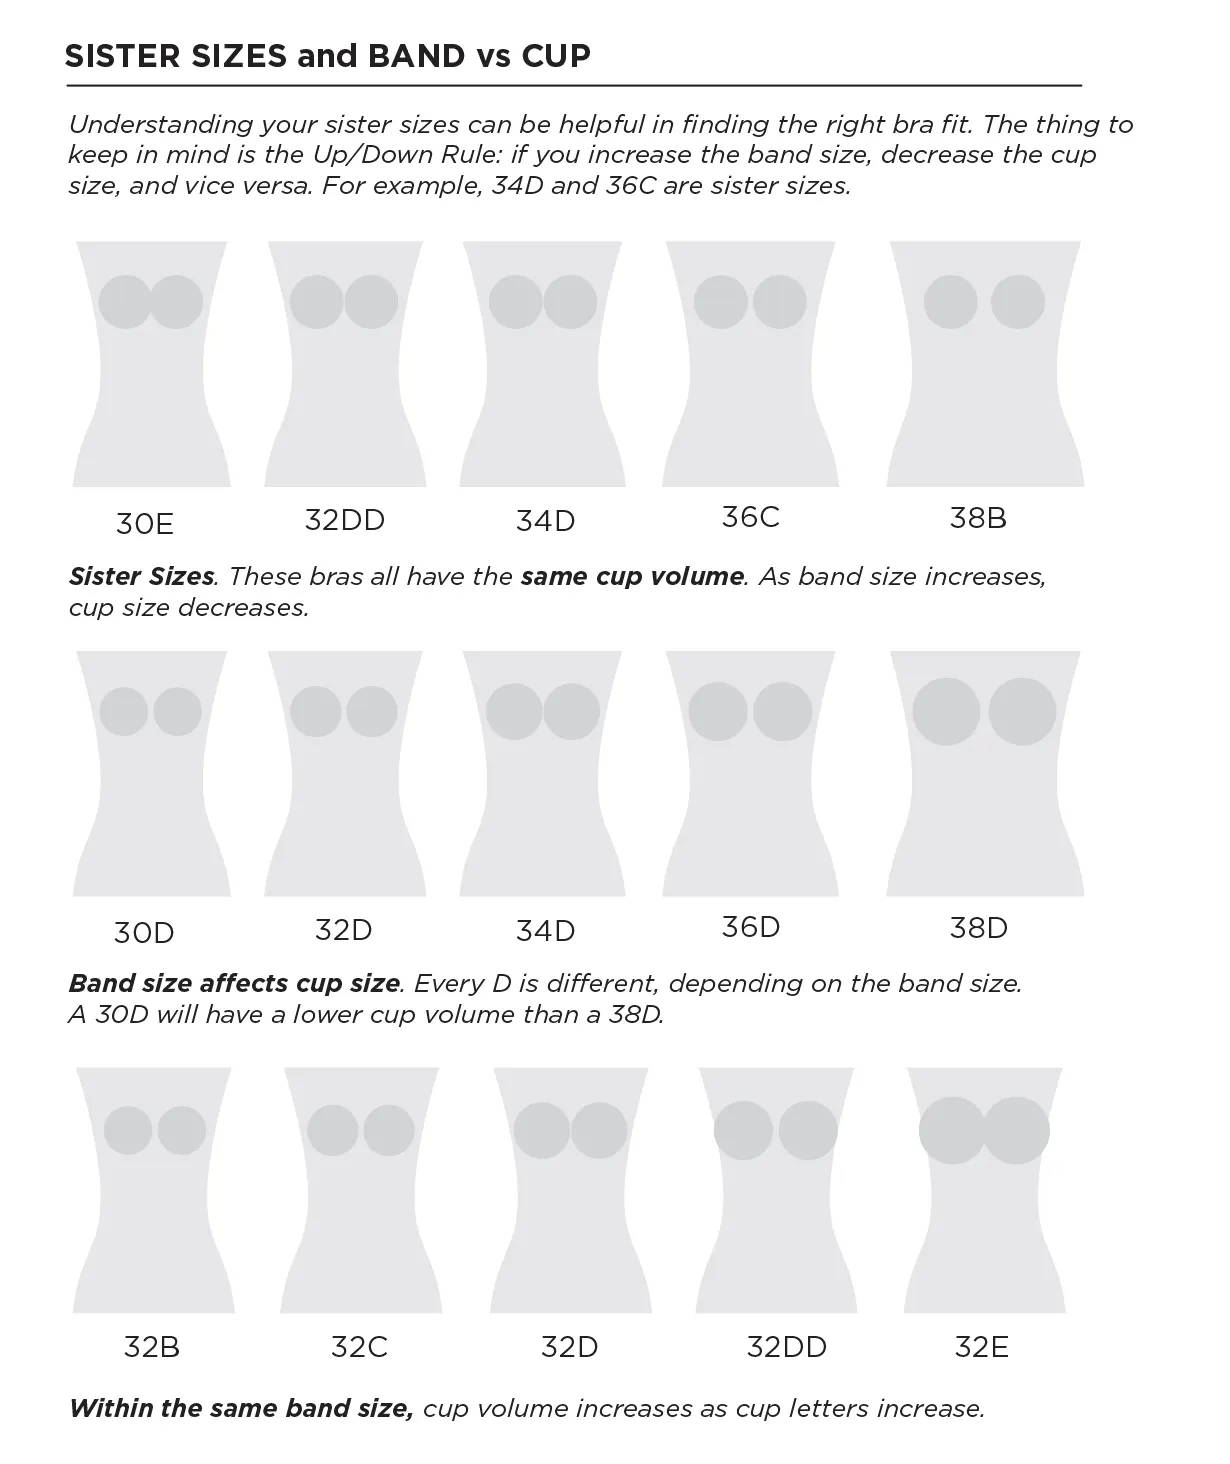 types of bra chart